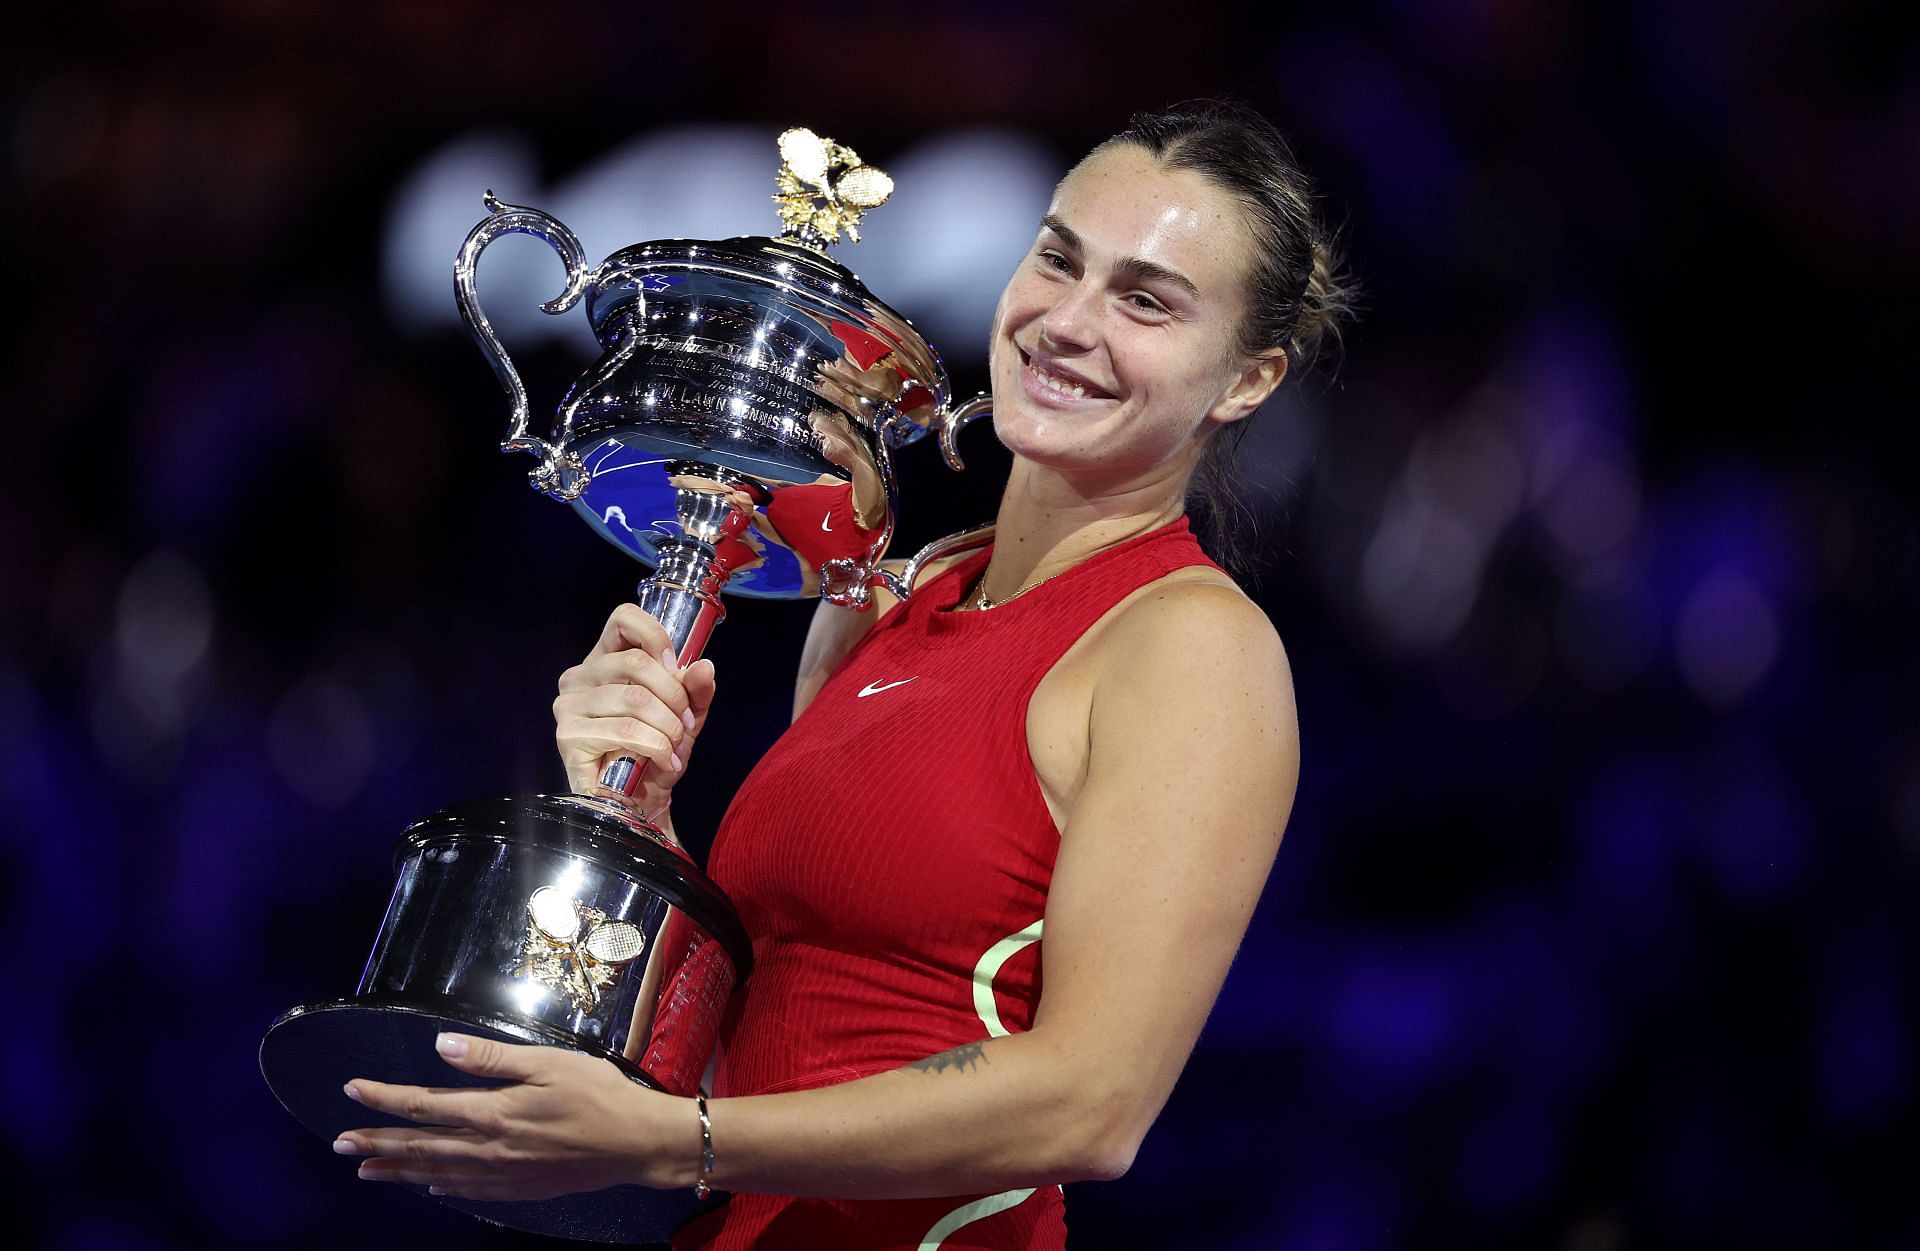 Sabalenka won her second consecutive Australian Open title this year